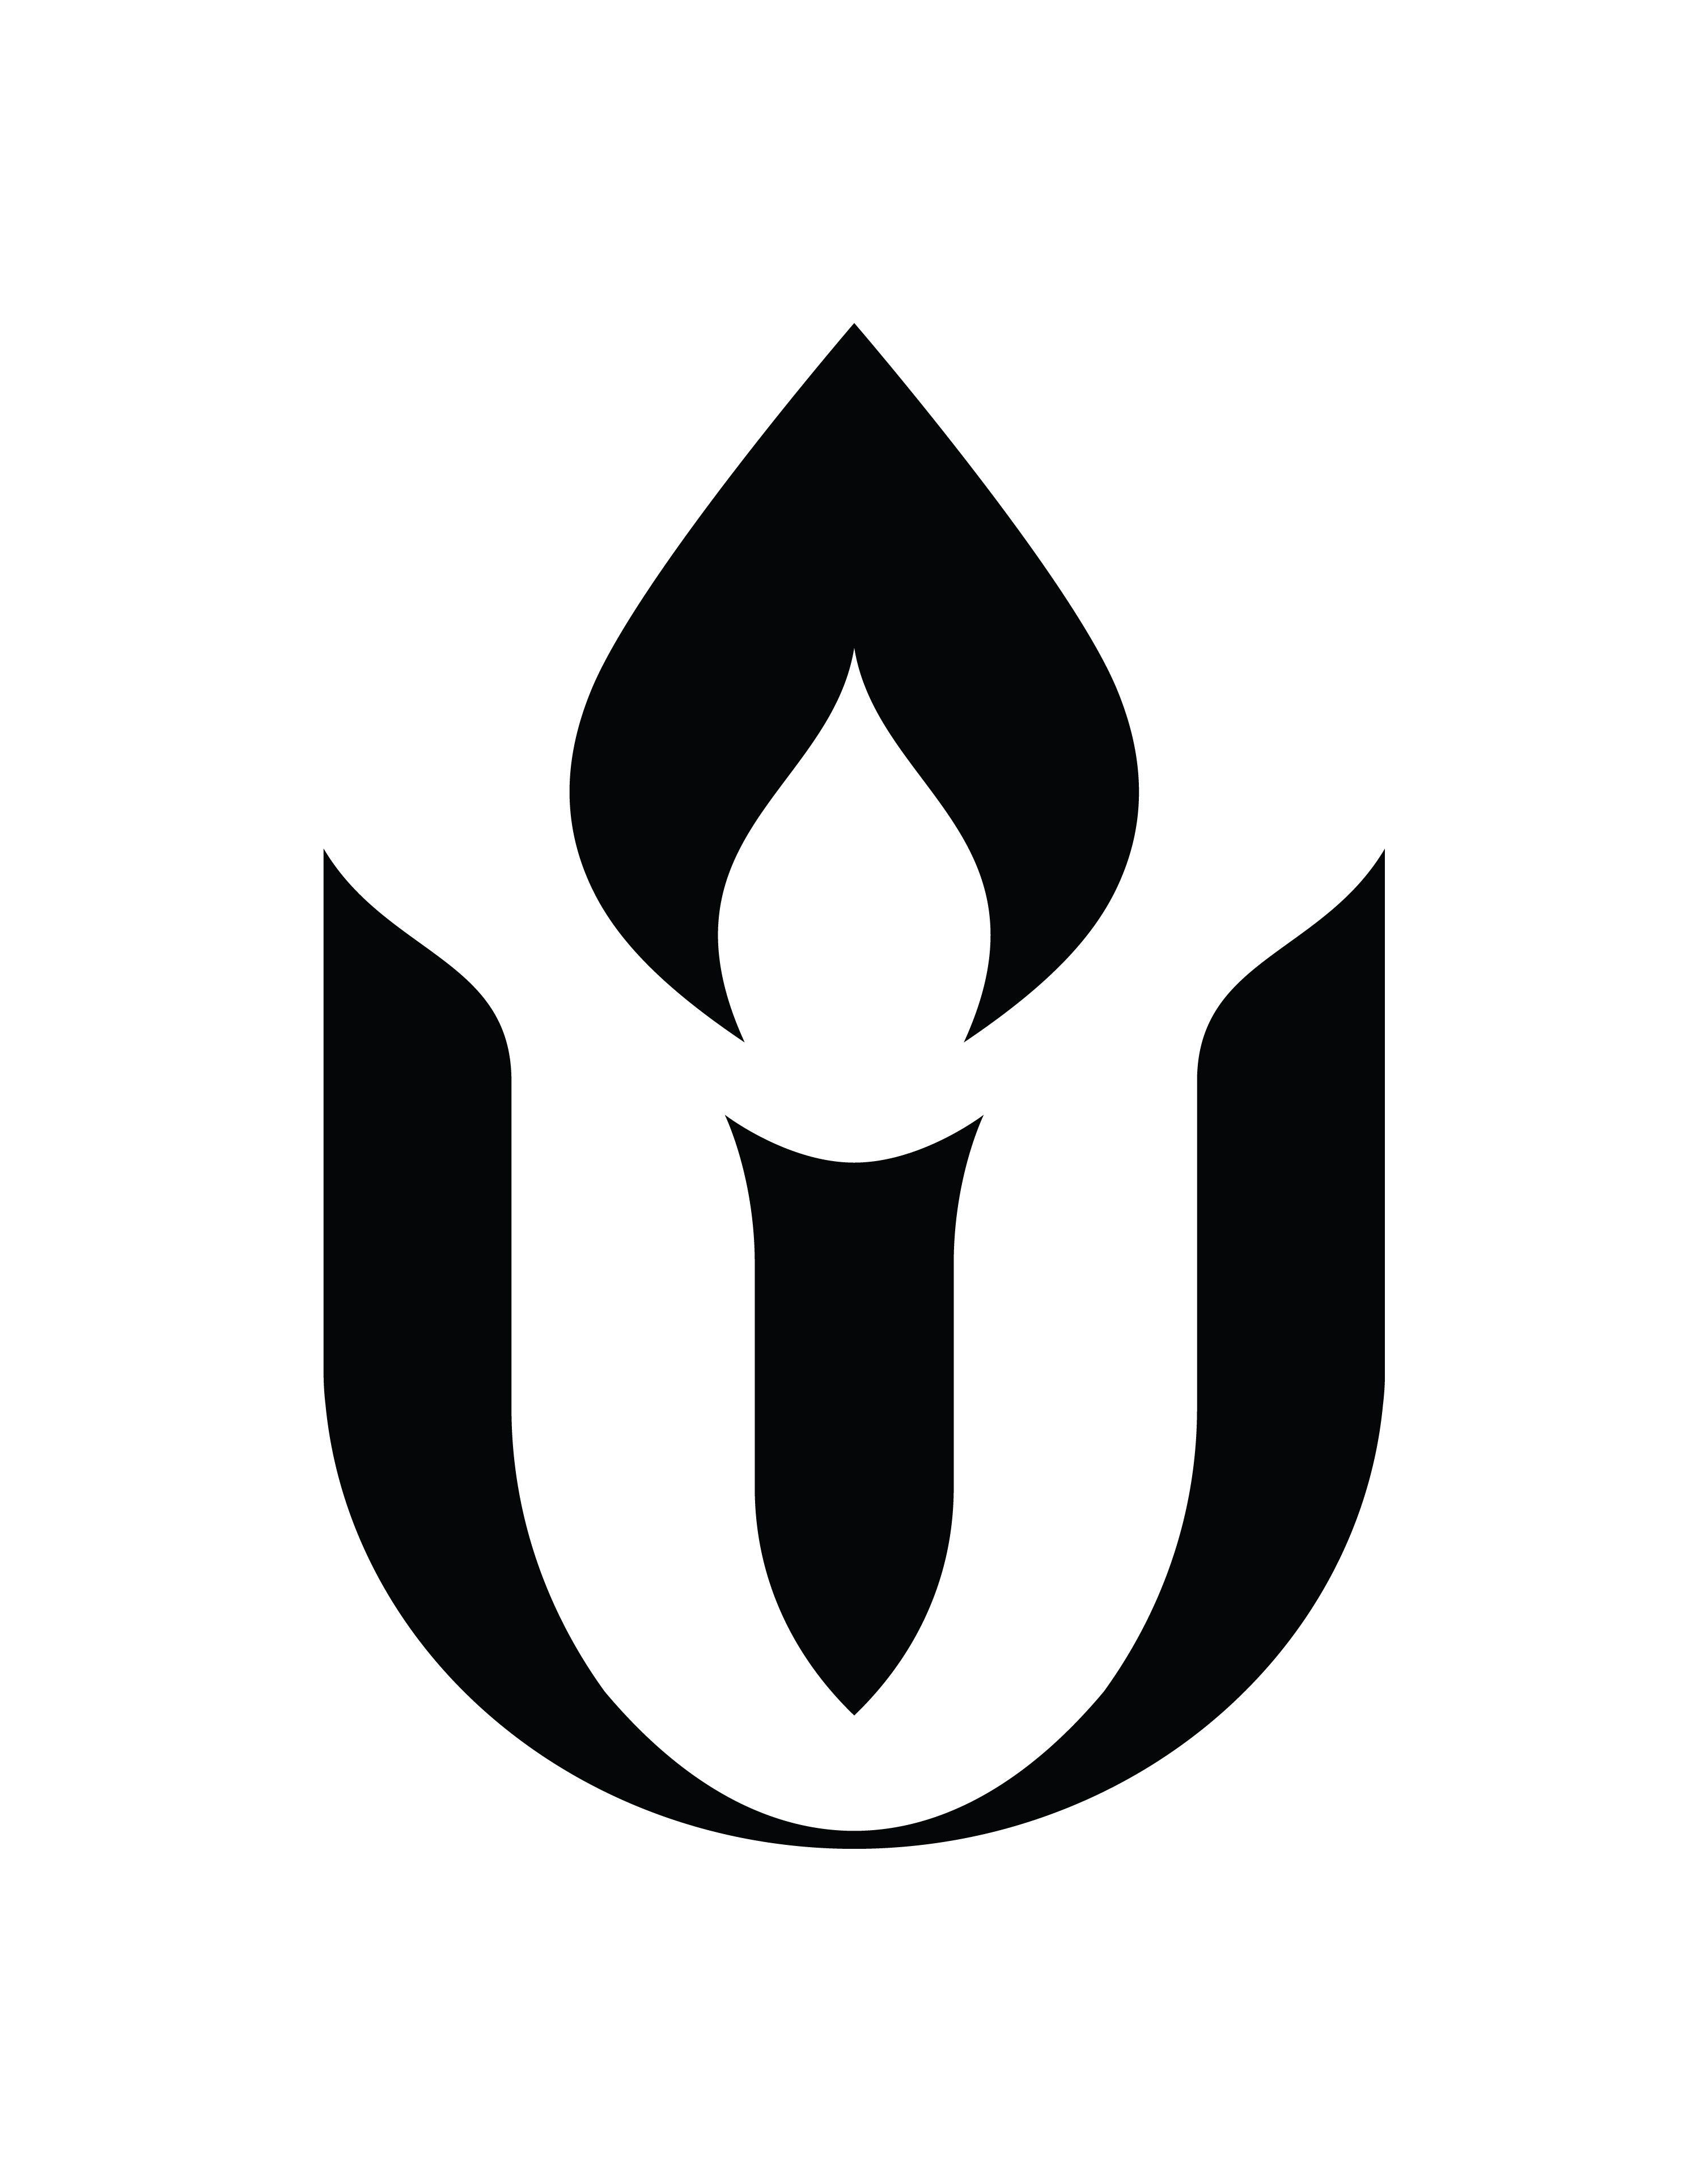 Uu Logo - UUA Logo and Graphics | UUA.org